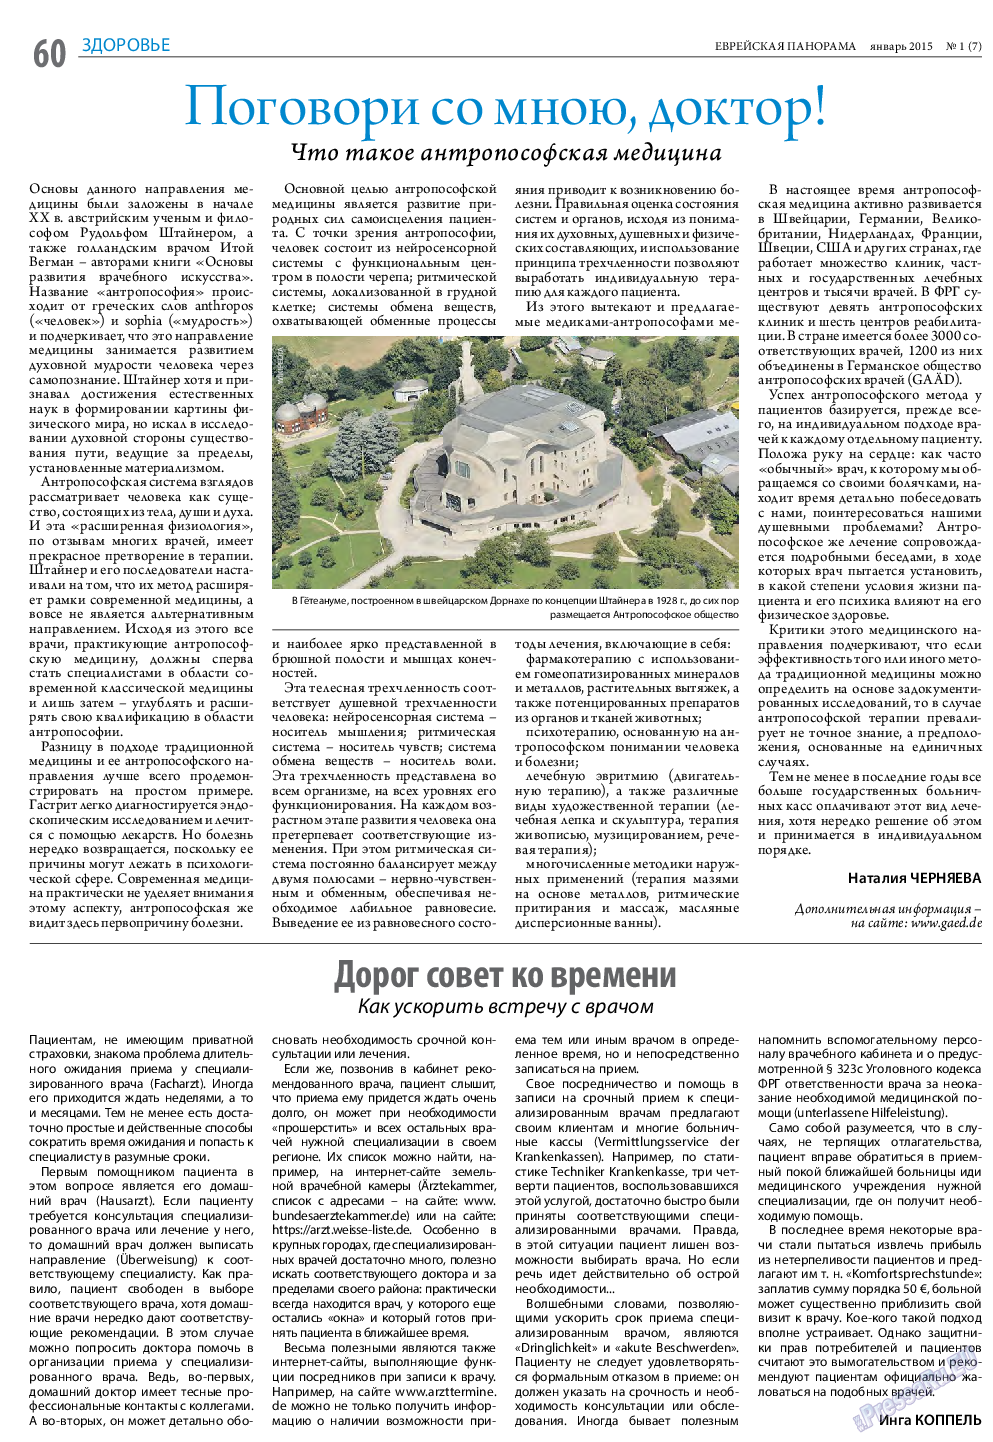 Еврейская панорама, газета. 2015 №1 стр.60